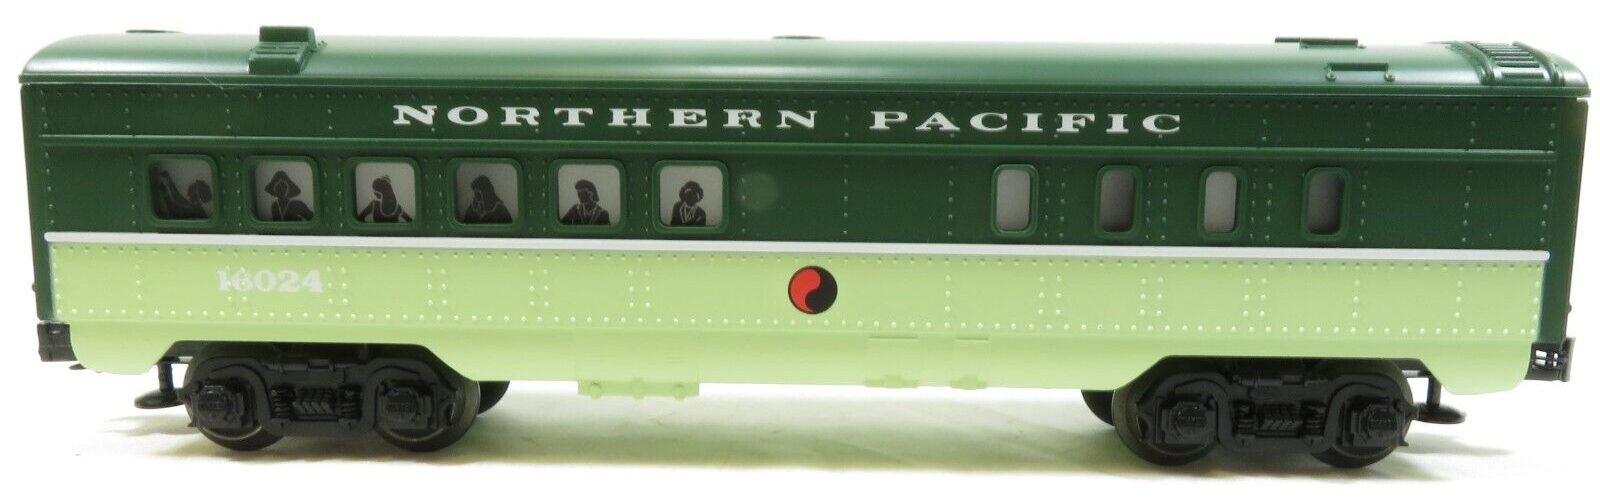 Lionel 6-16024 Northern Pacific Dining Car NIB